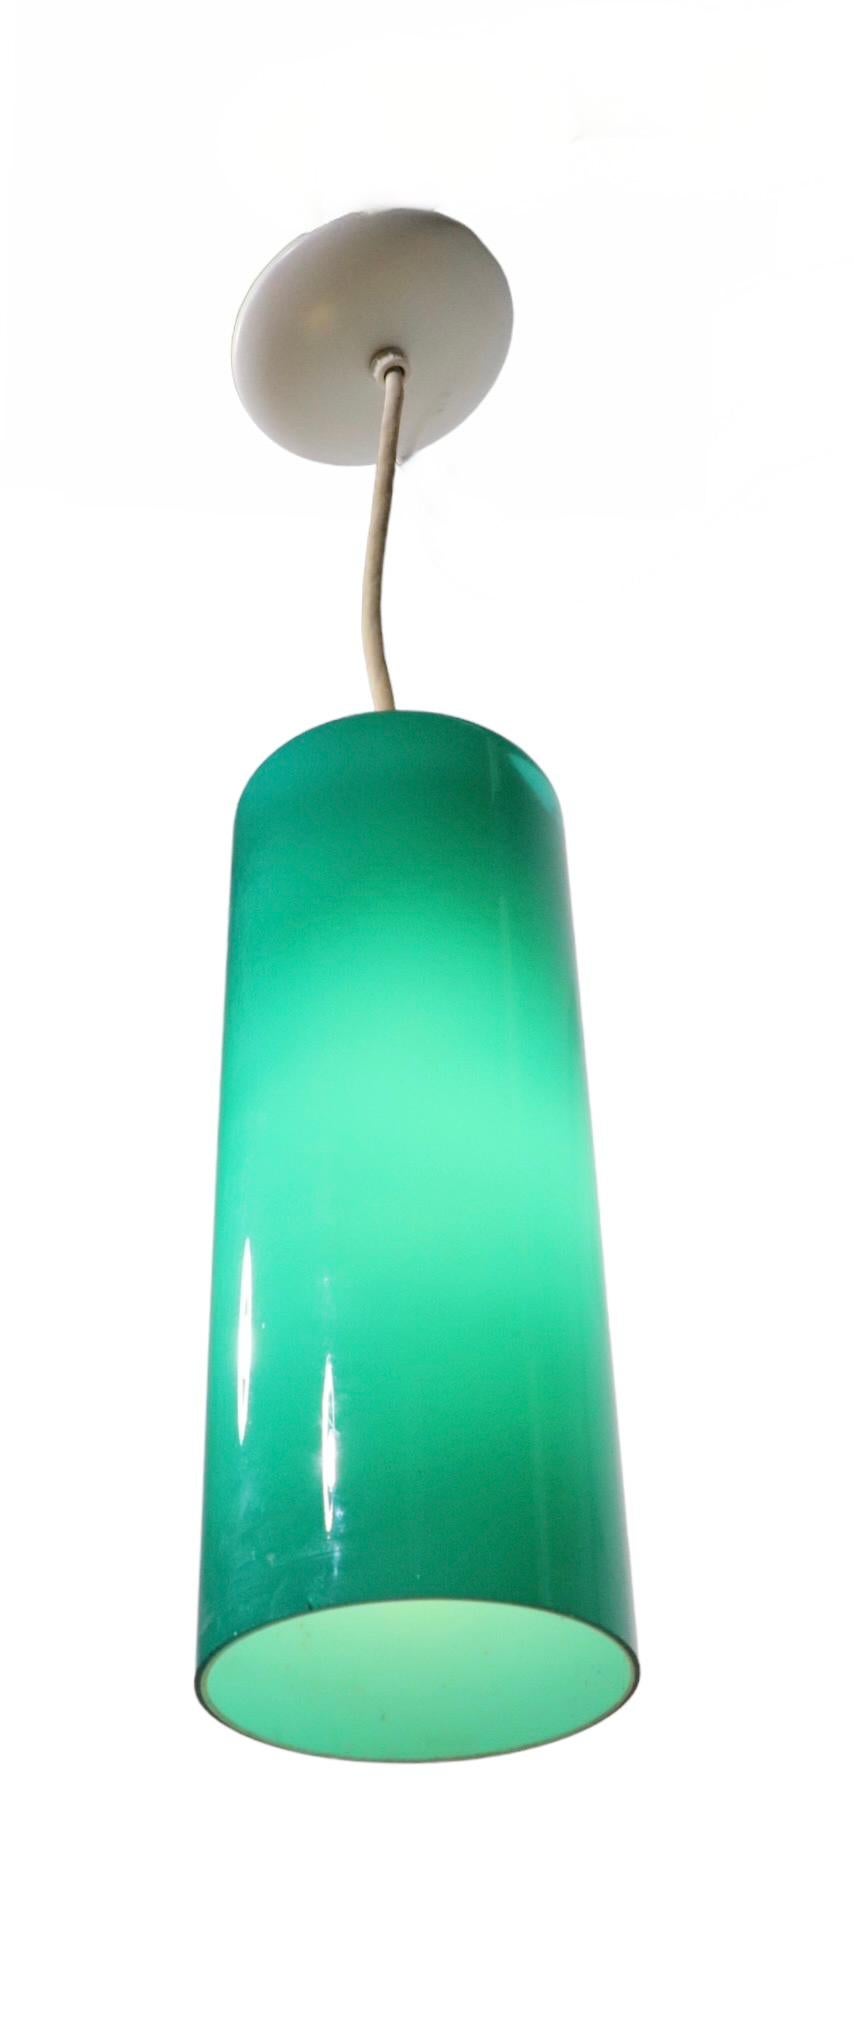 Prescolit-Zylinder-Kronleuchter aus grünem Glas, ca. 1950 - 1970er Jahre im Angebot 5